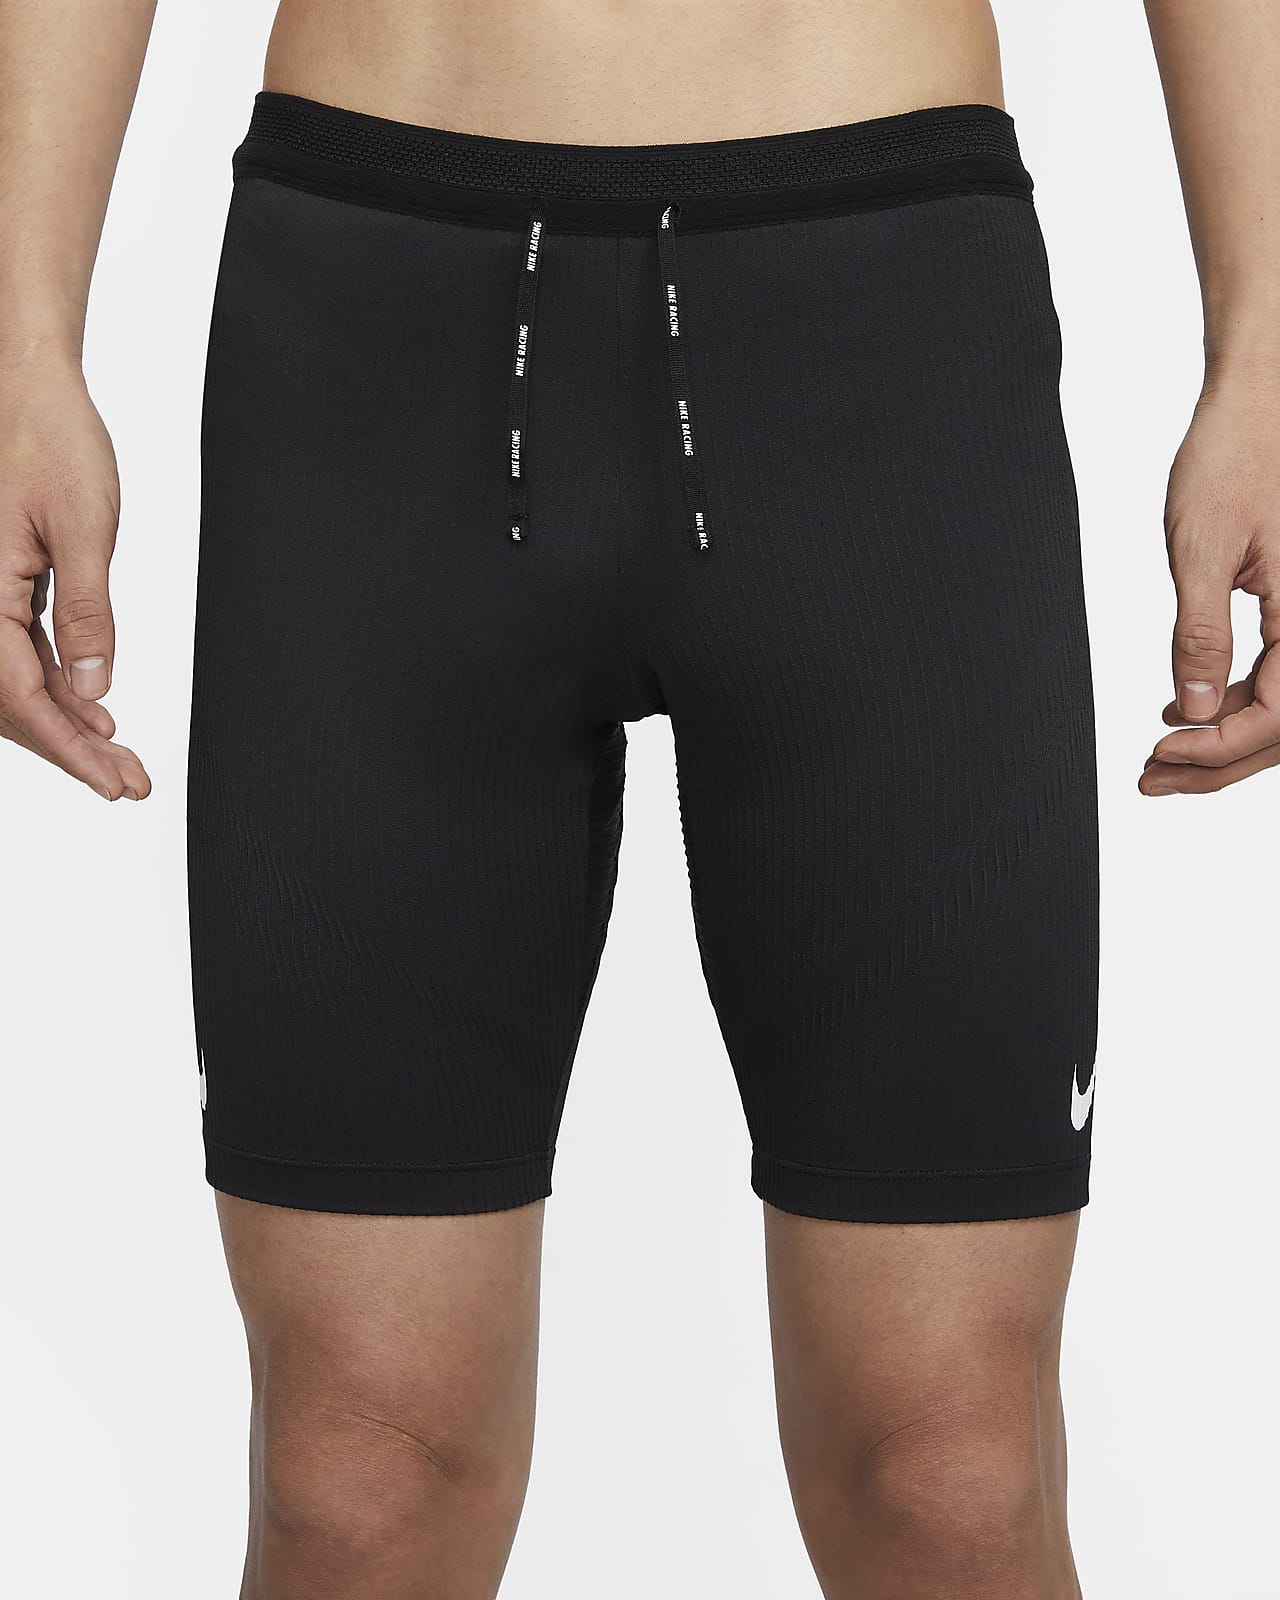 Buy Women Underskirt Short Pants Knee Length Lace Leggings Soft Underwear  Boyshorts at Amazon.in